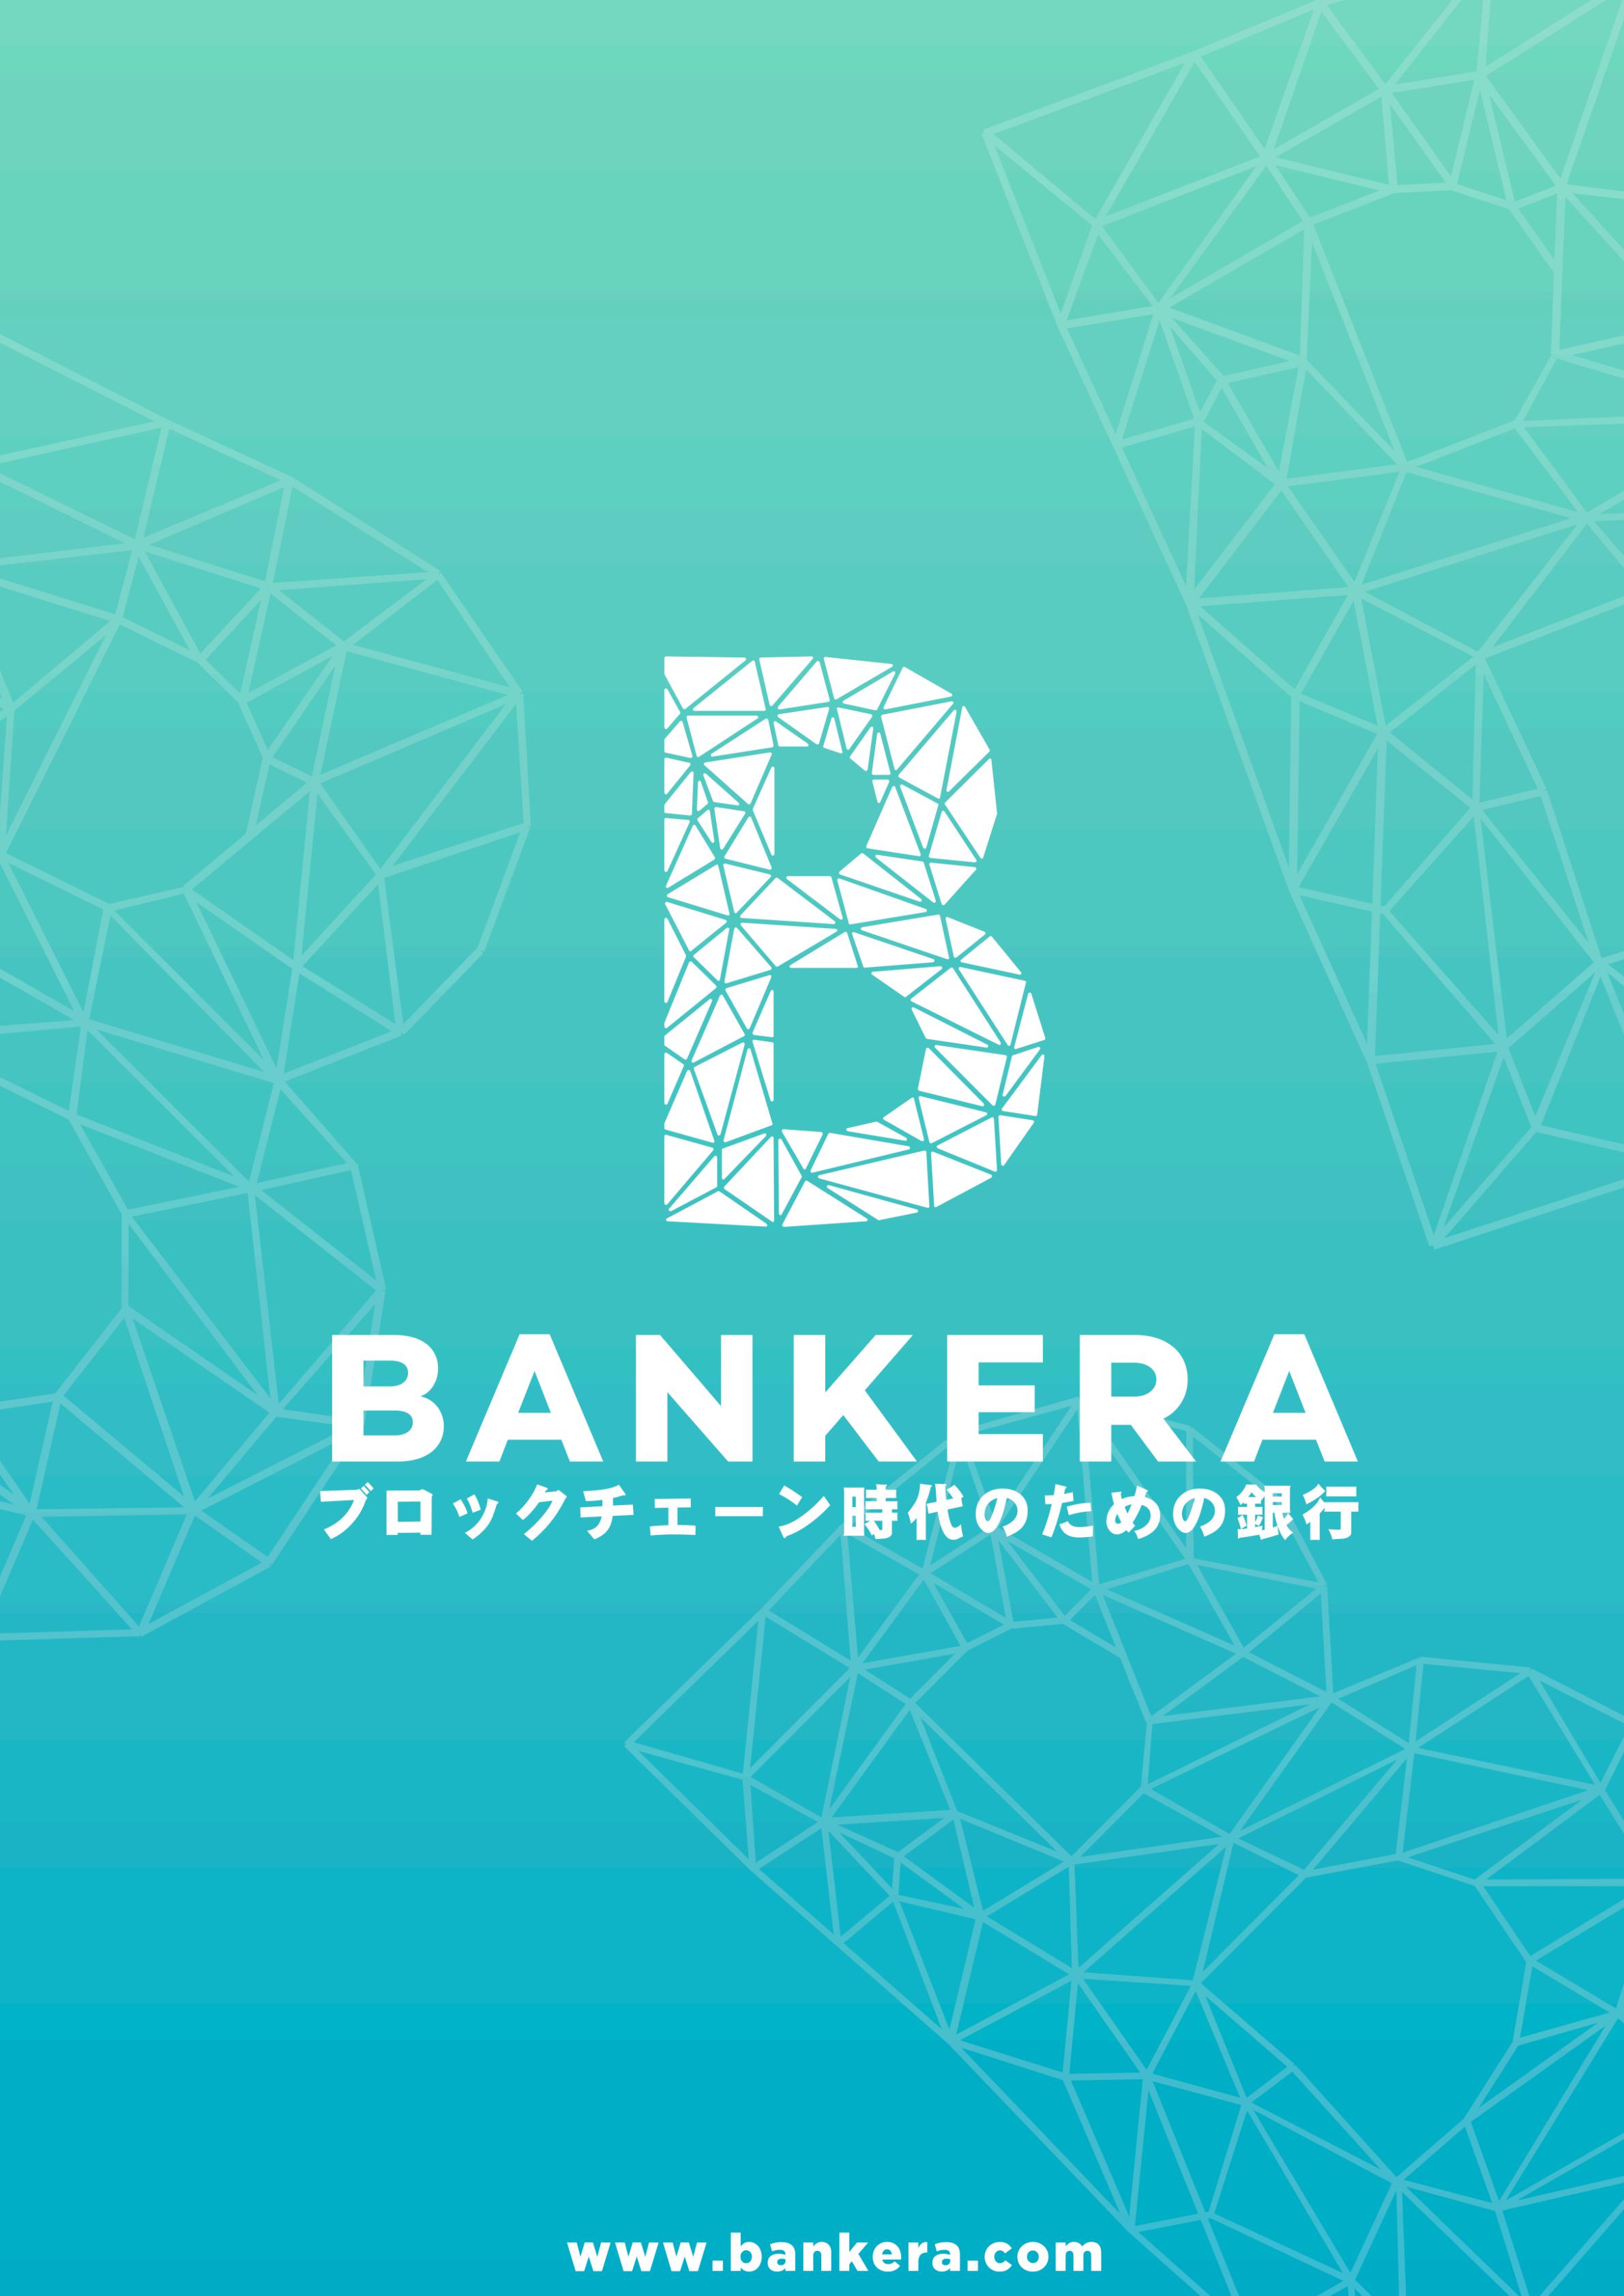 BNK_Bankera_whitepaper_JA_00.jpg